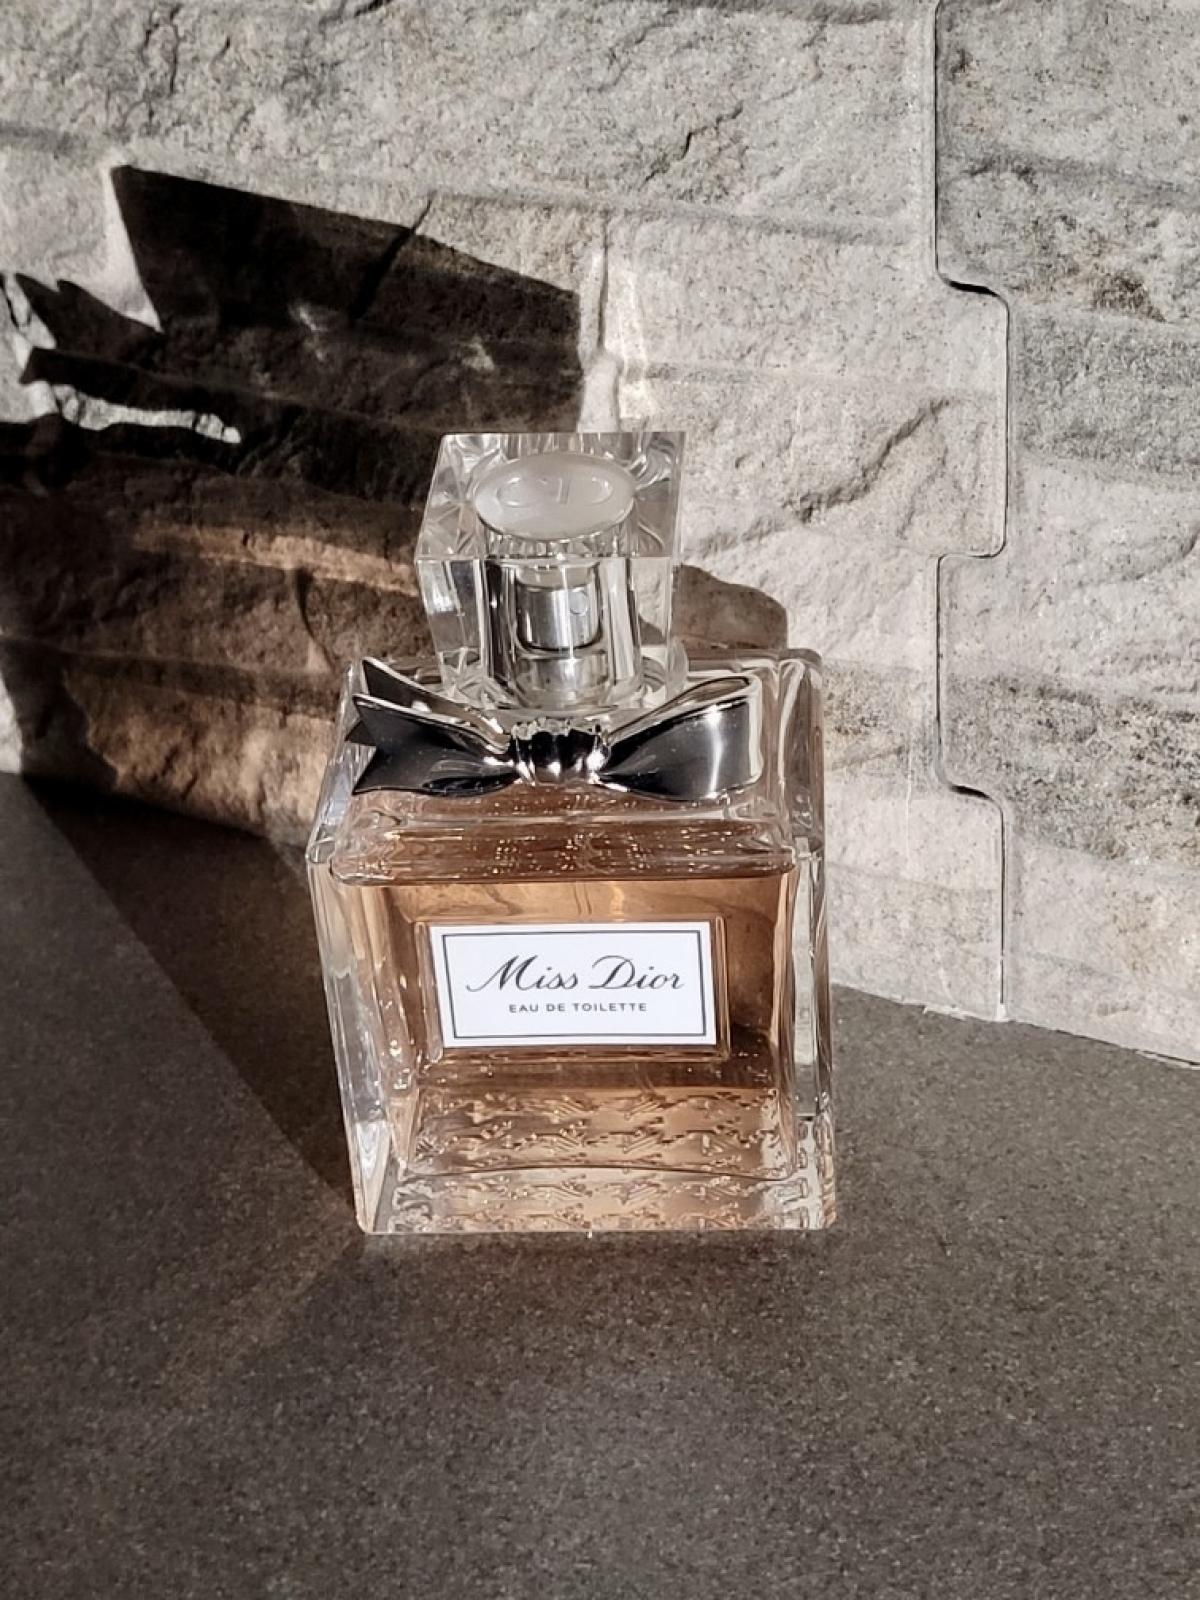 Miss Dior Eau De Toilette Dior perfume - a fragrance for women 2013